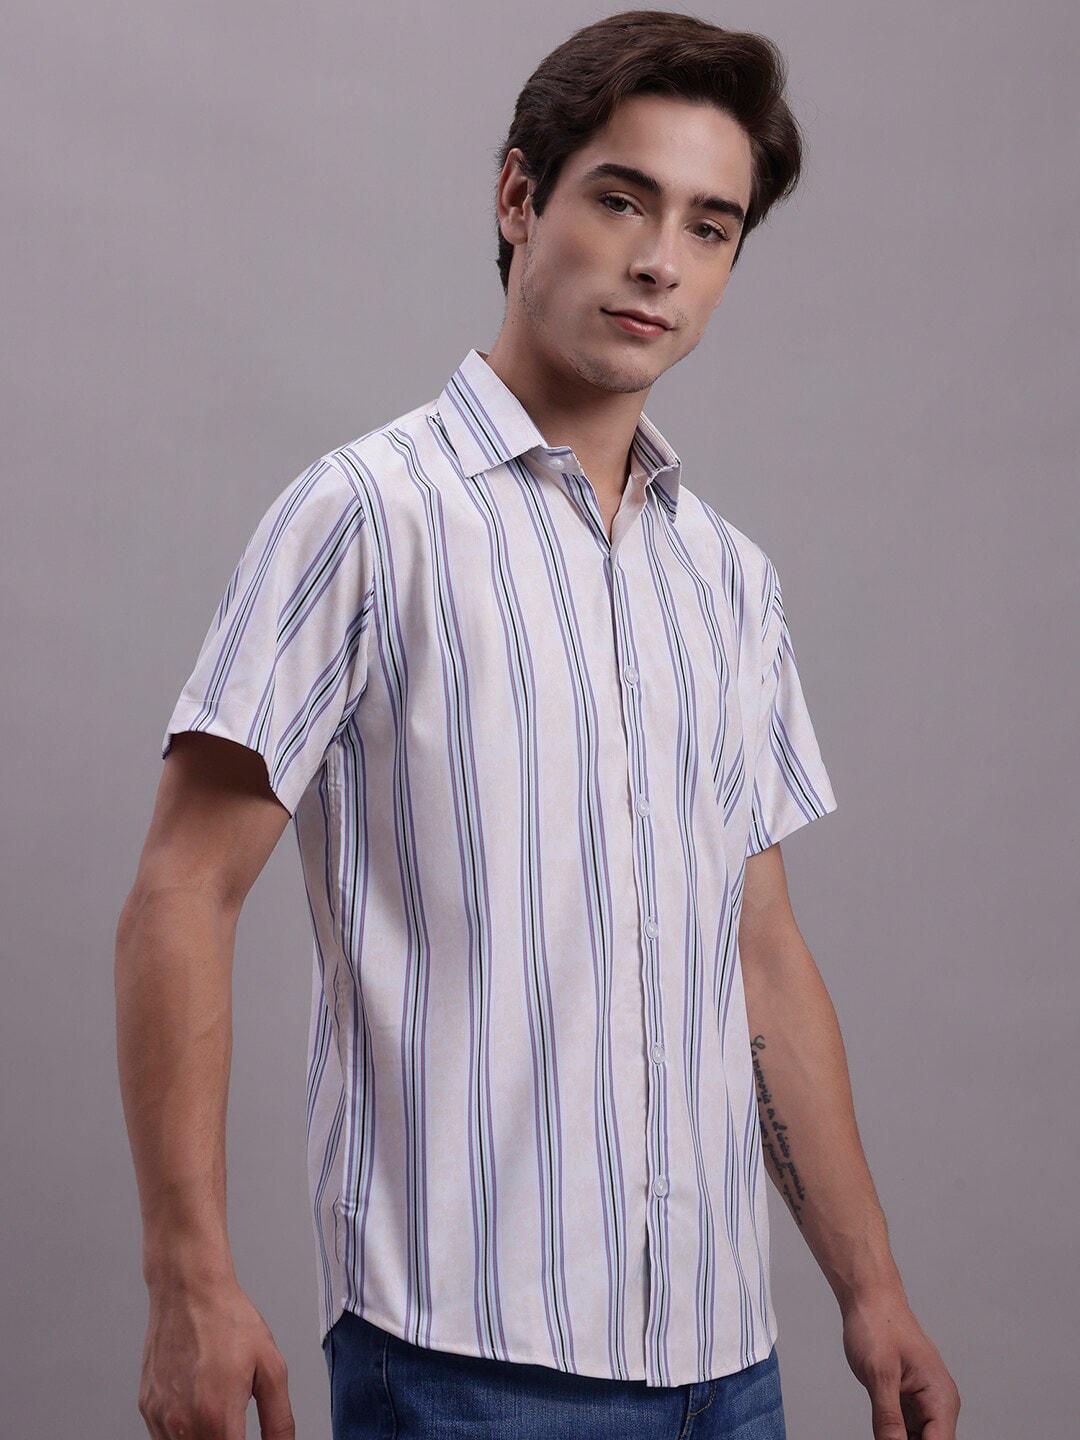 jainish classic multi striped spread collar casual shirt